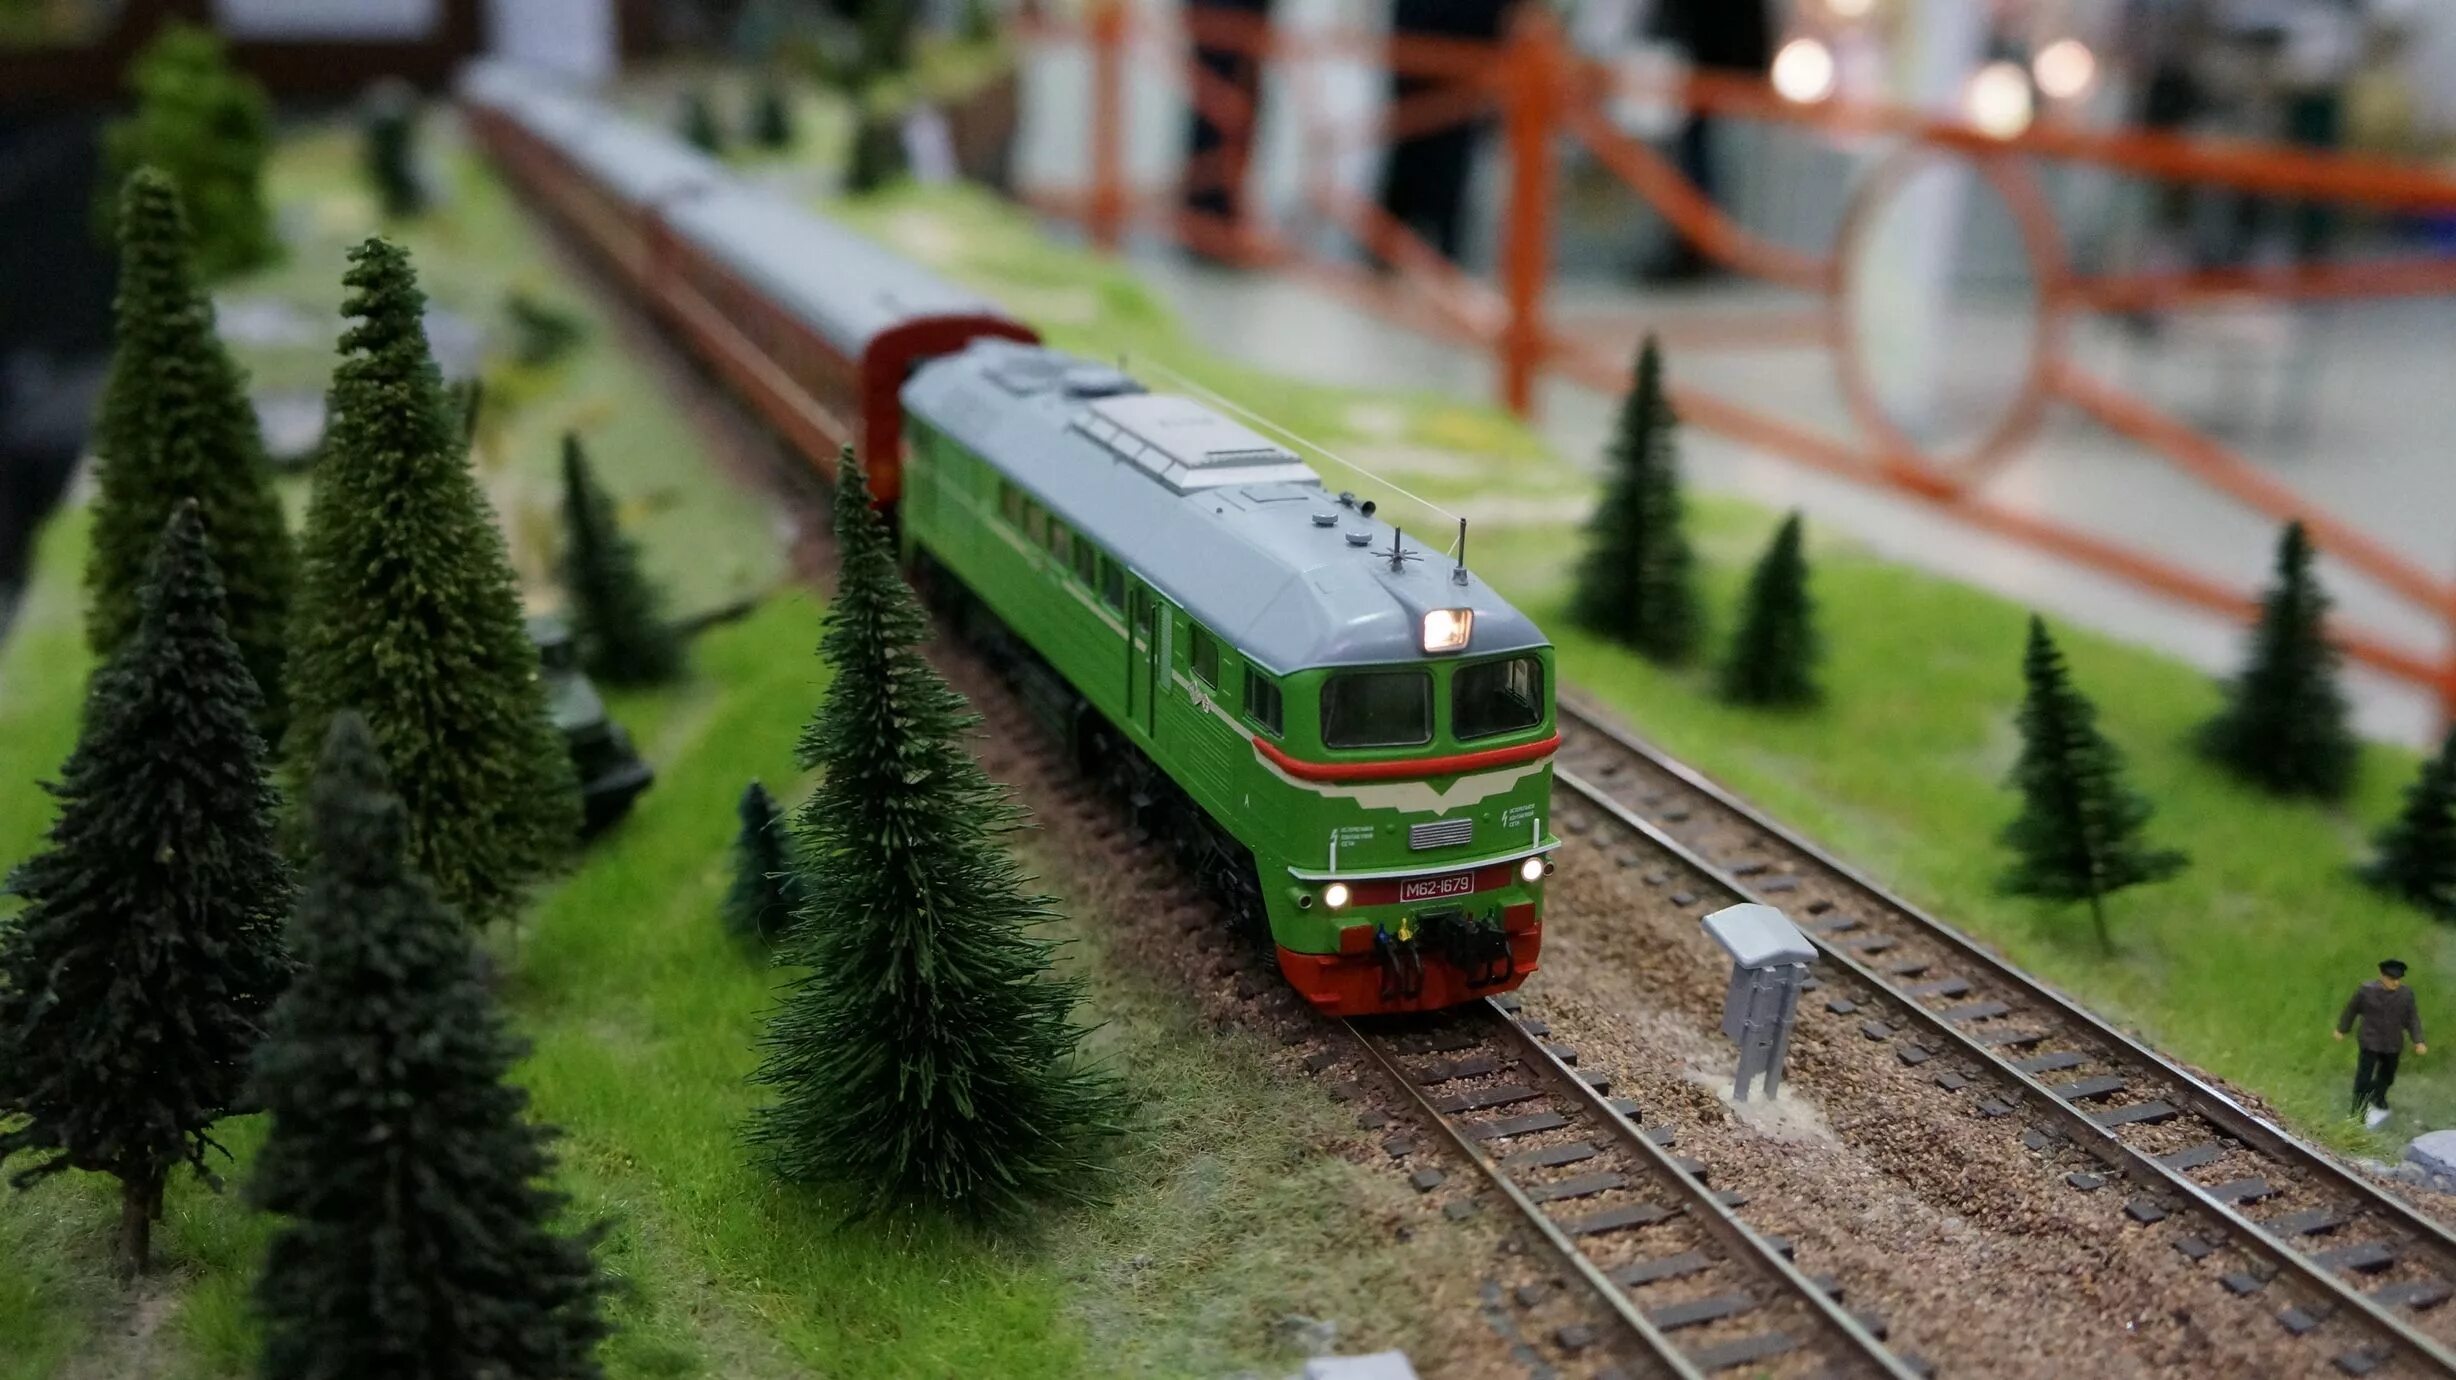 Модели с железной дорогой. Tech Train 90127 модель железной дороги. Макет железной дороги. Макеты железных дорог. ЖД моделирование.